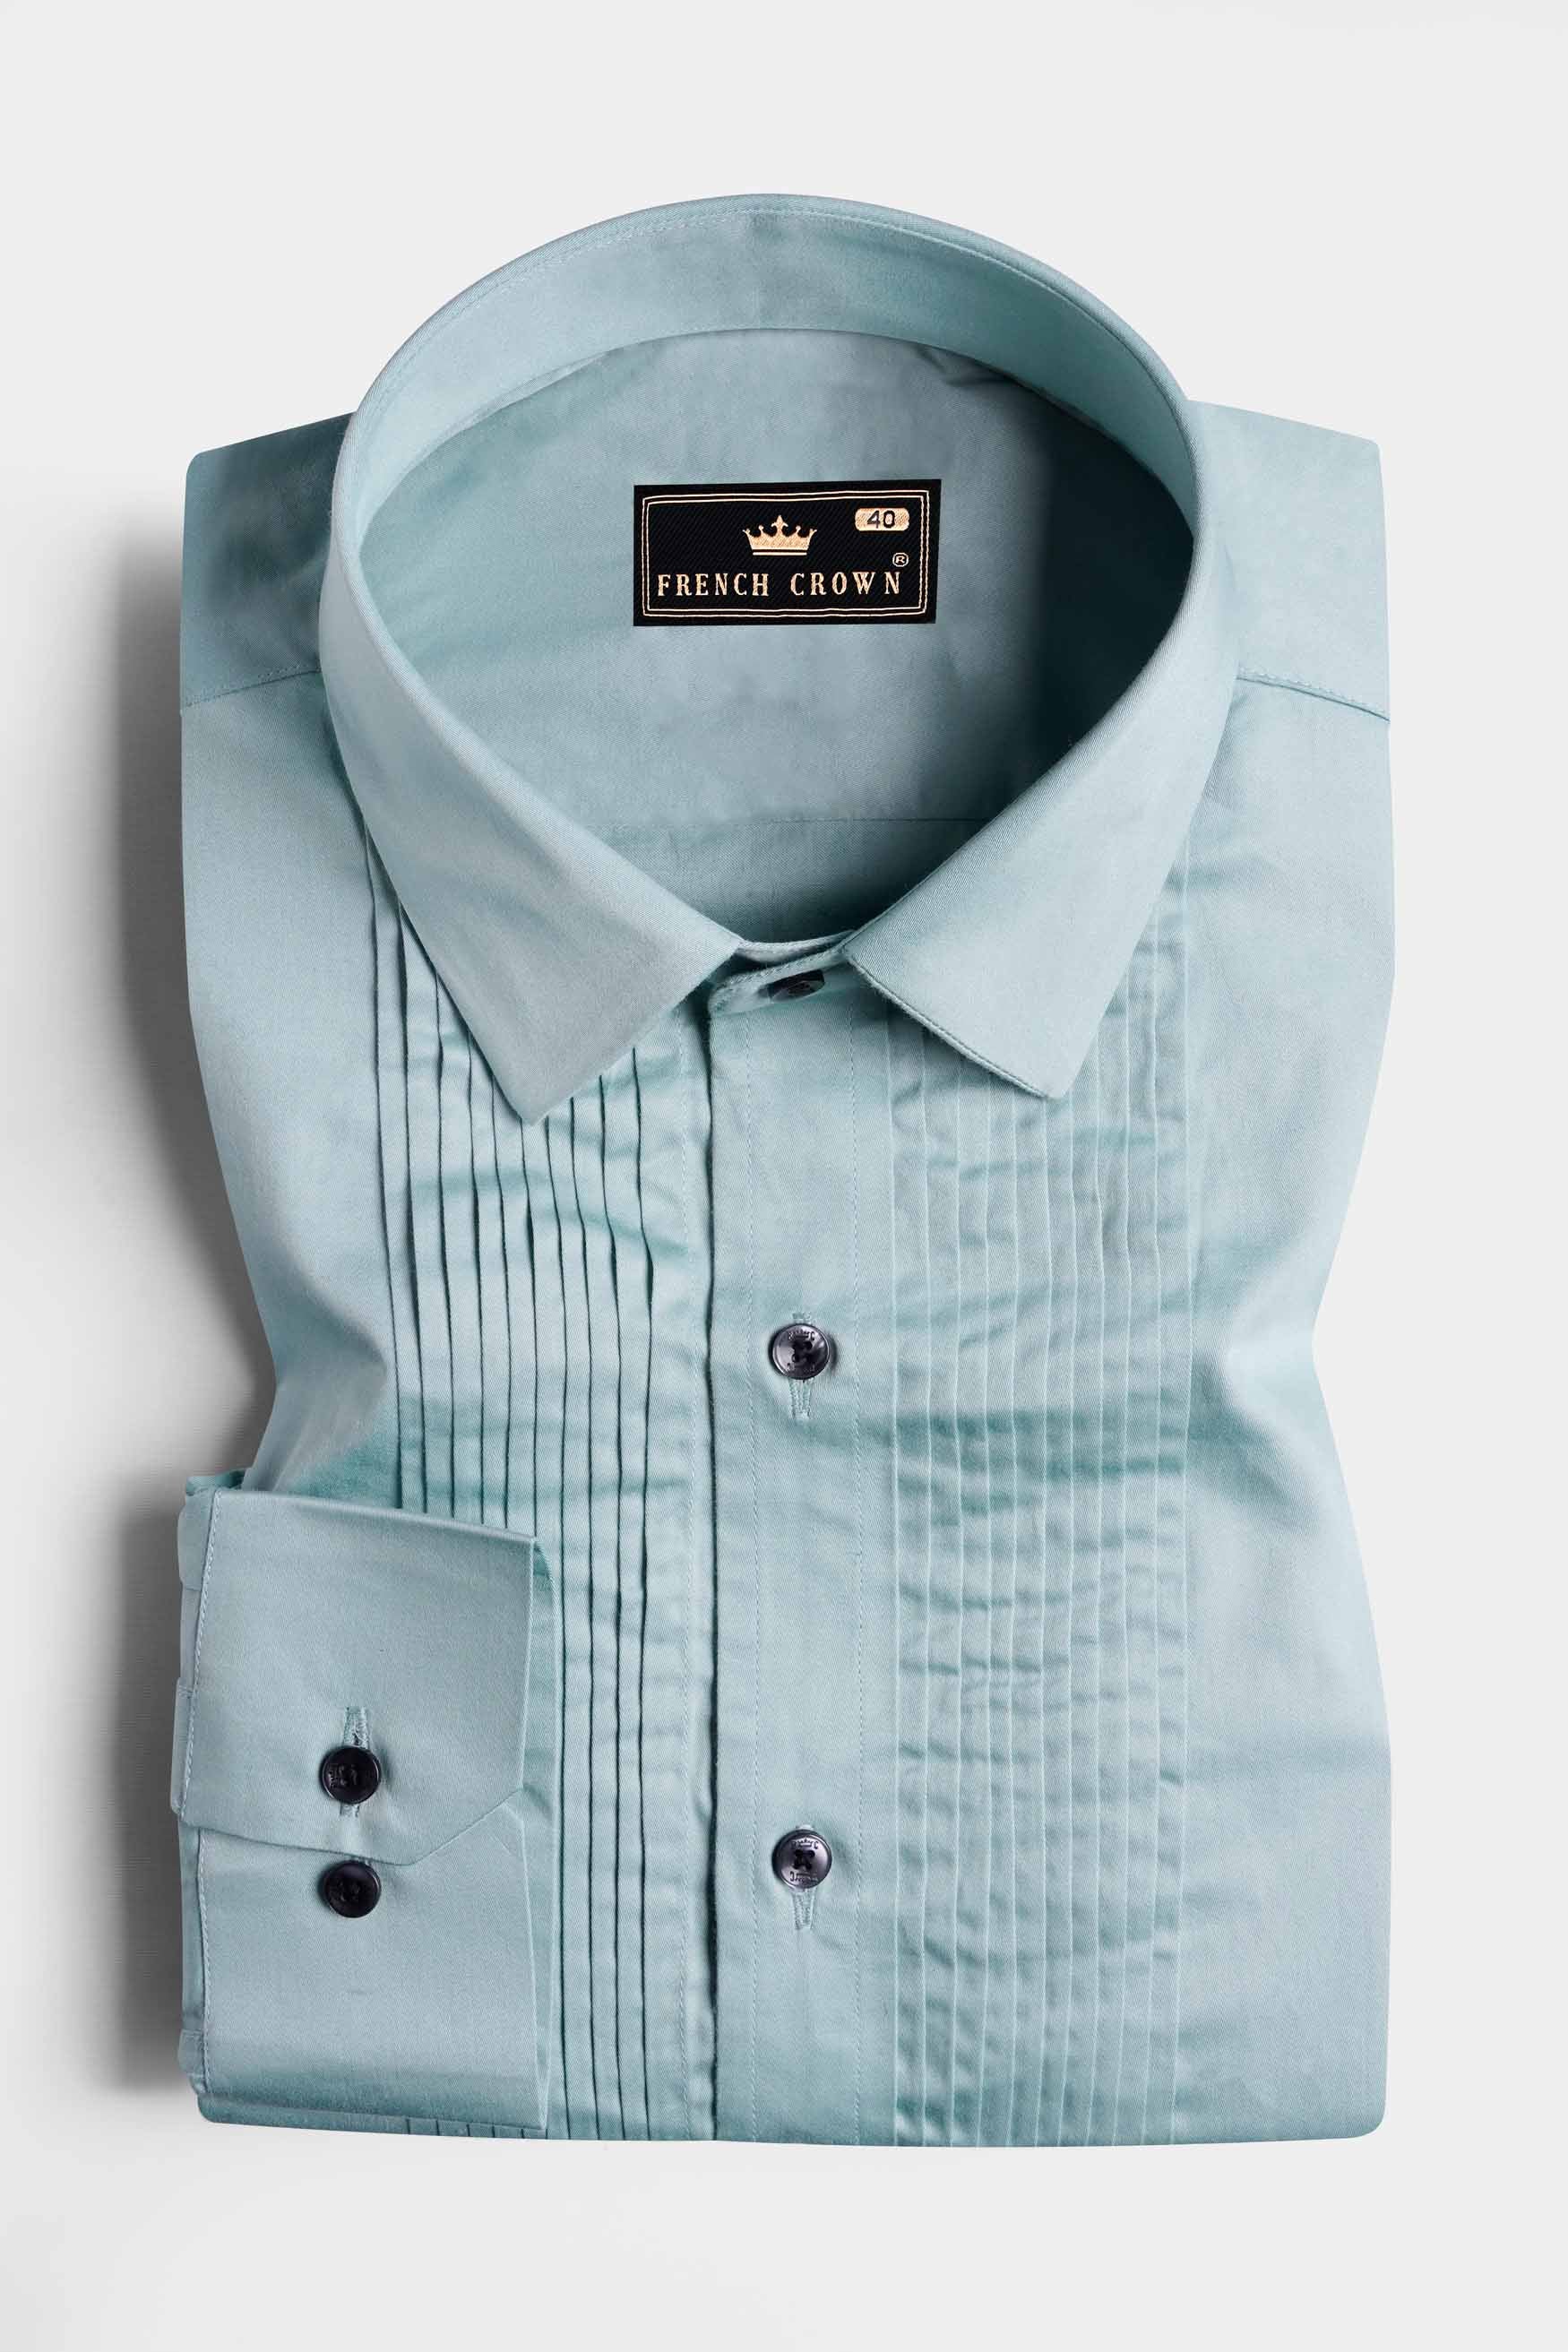 Neptune Blue Subtle Sheen Super Soft Premium Cotton Tuxedo Shirt